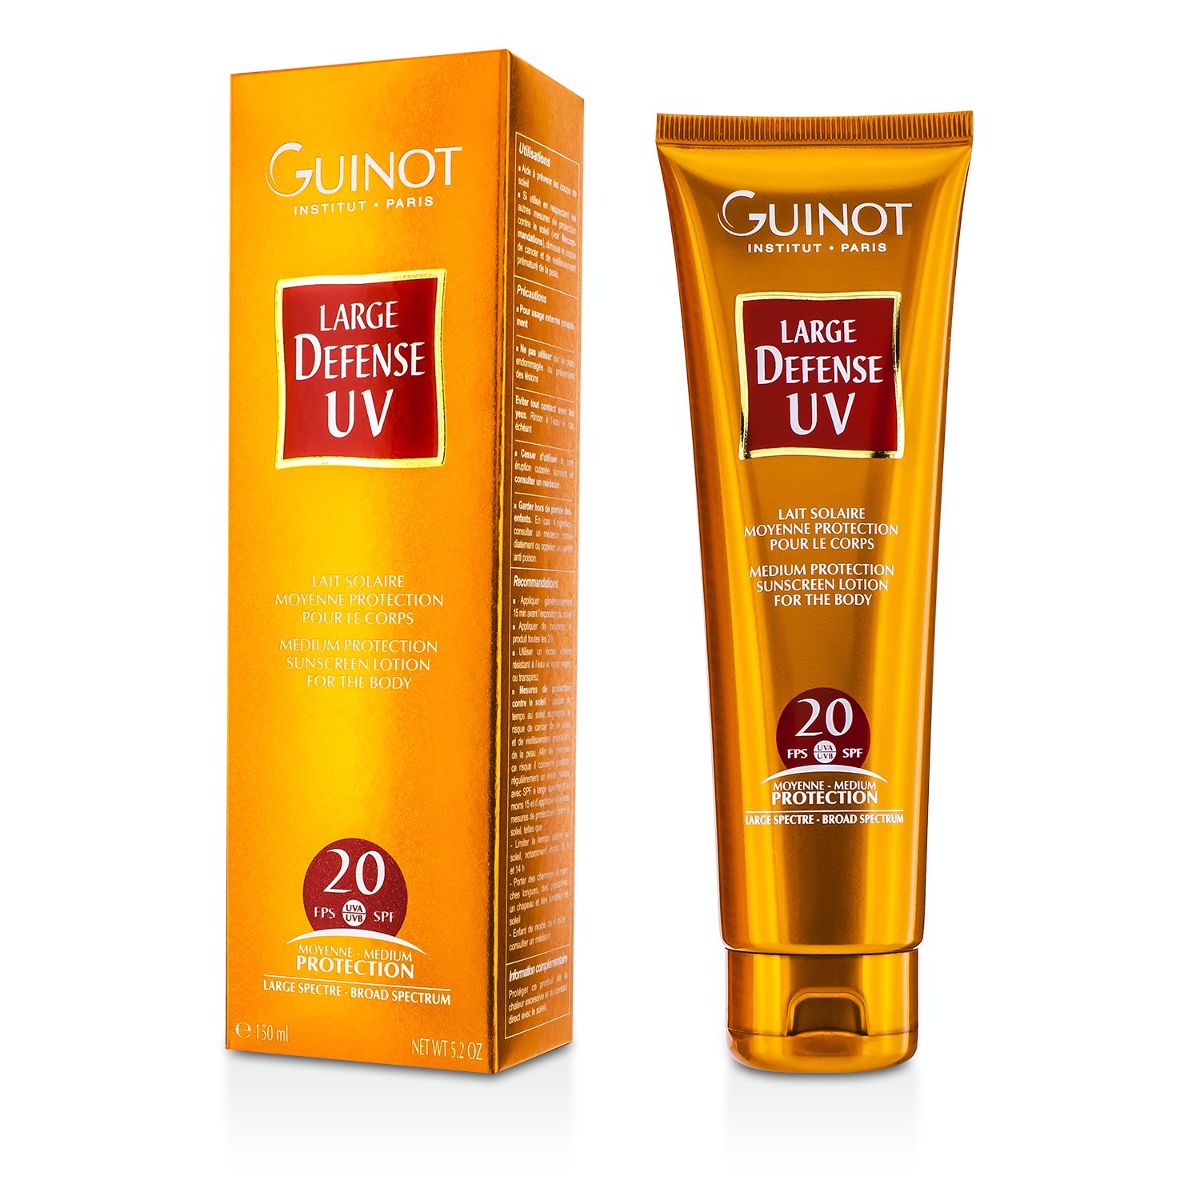 Large Defense UV Sunscreen Lotion SPF20 (For Body) Guinot Image